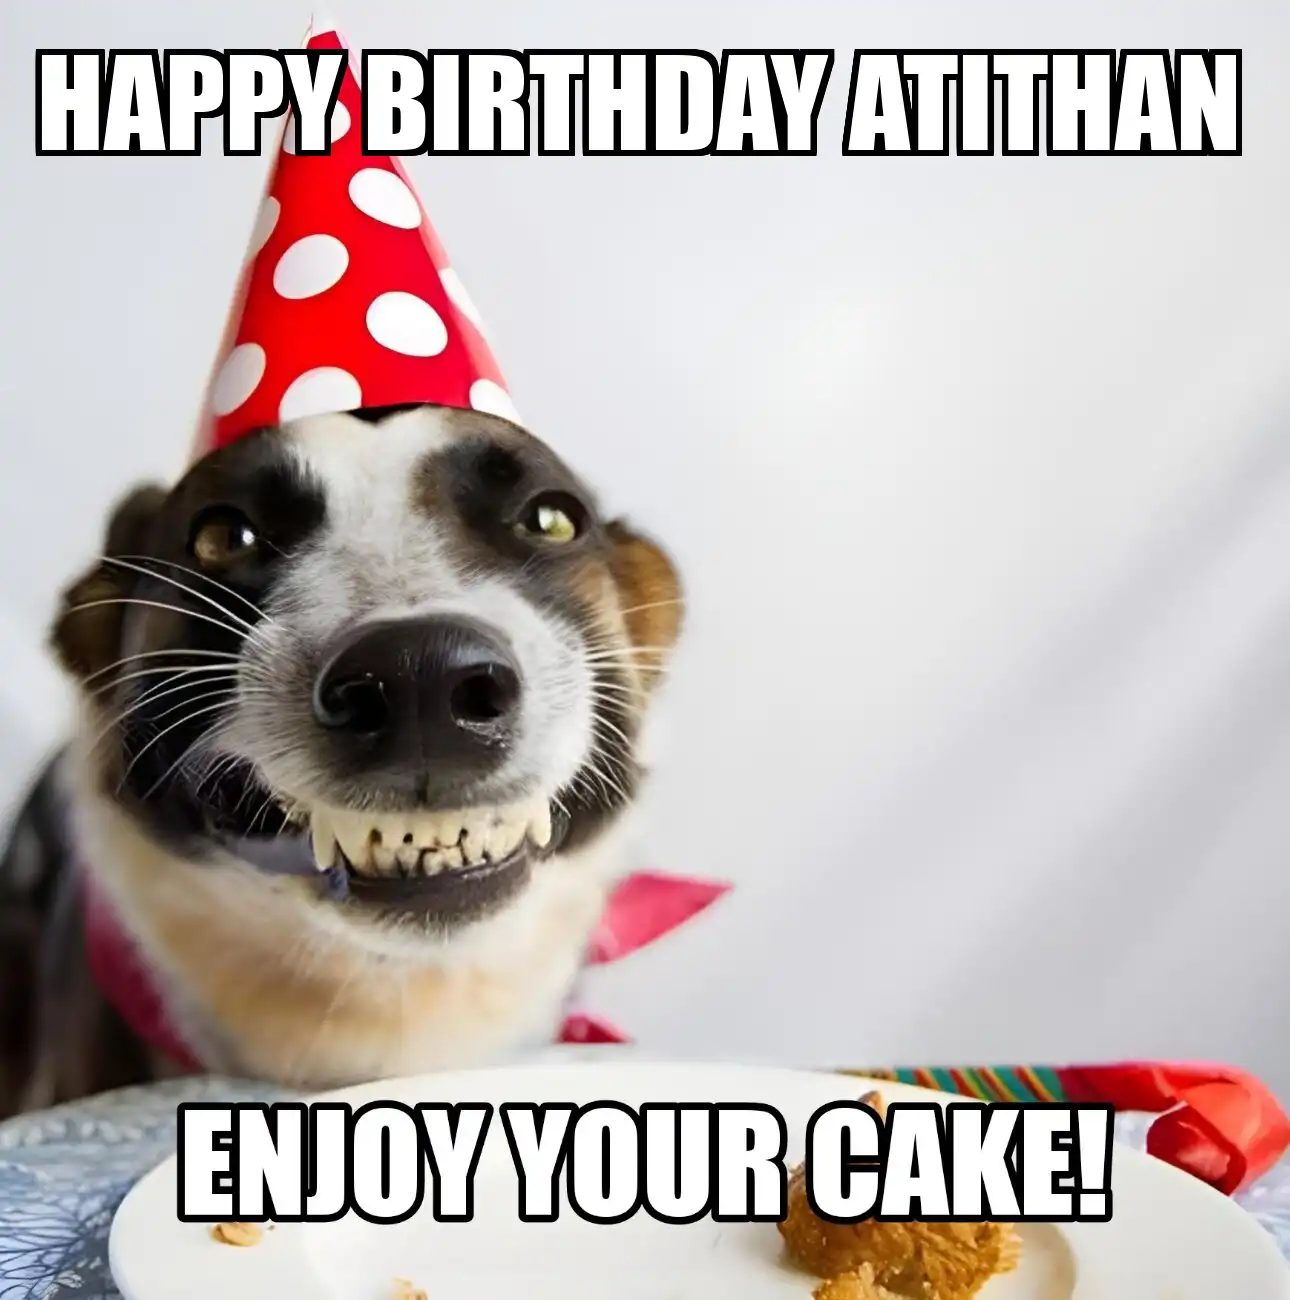 Happy Birthday Atithan Enjoy Your Cake Dog Meme